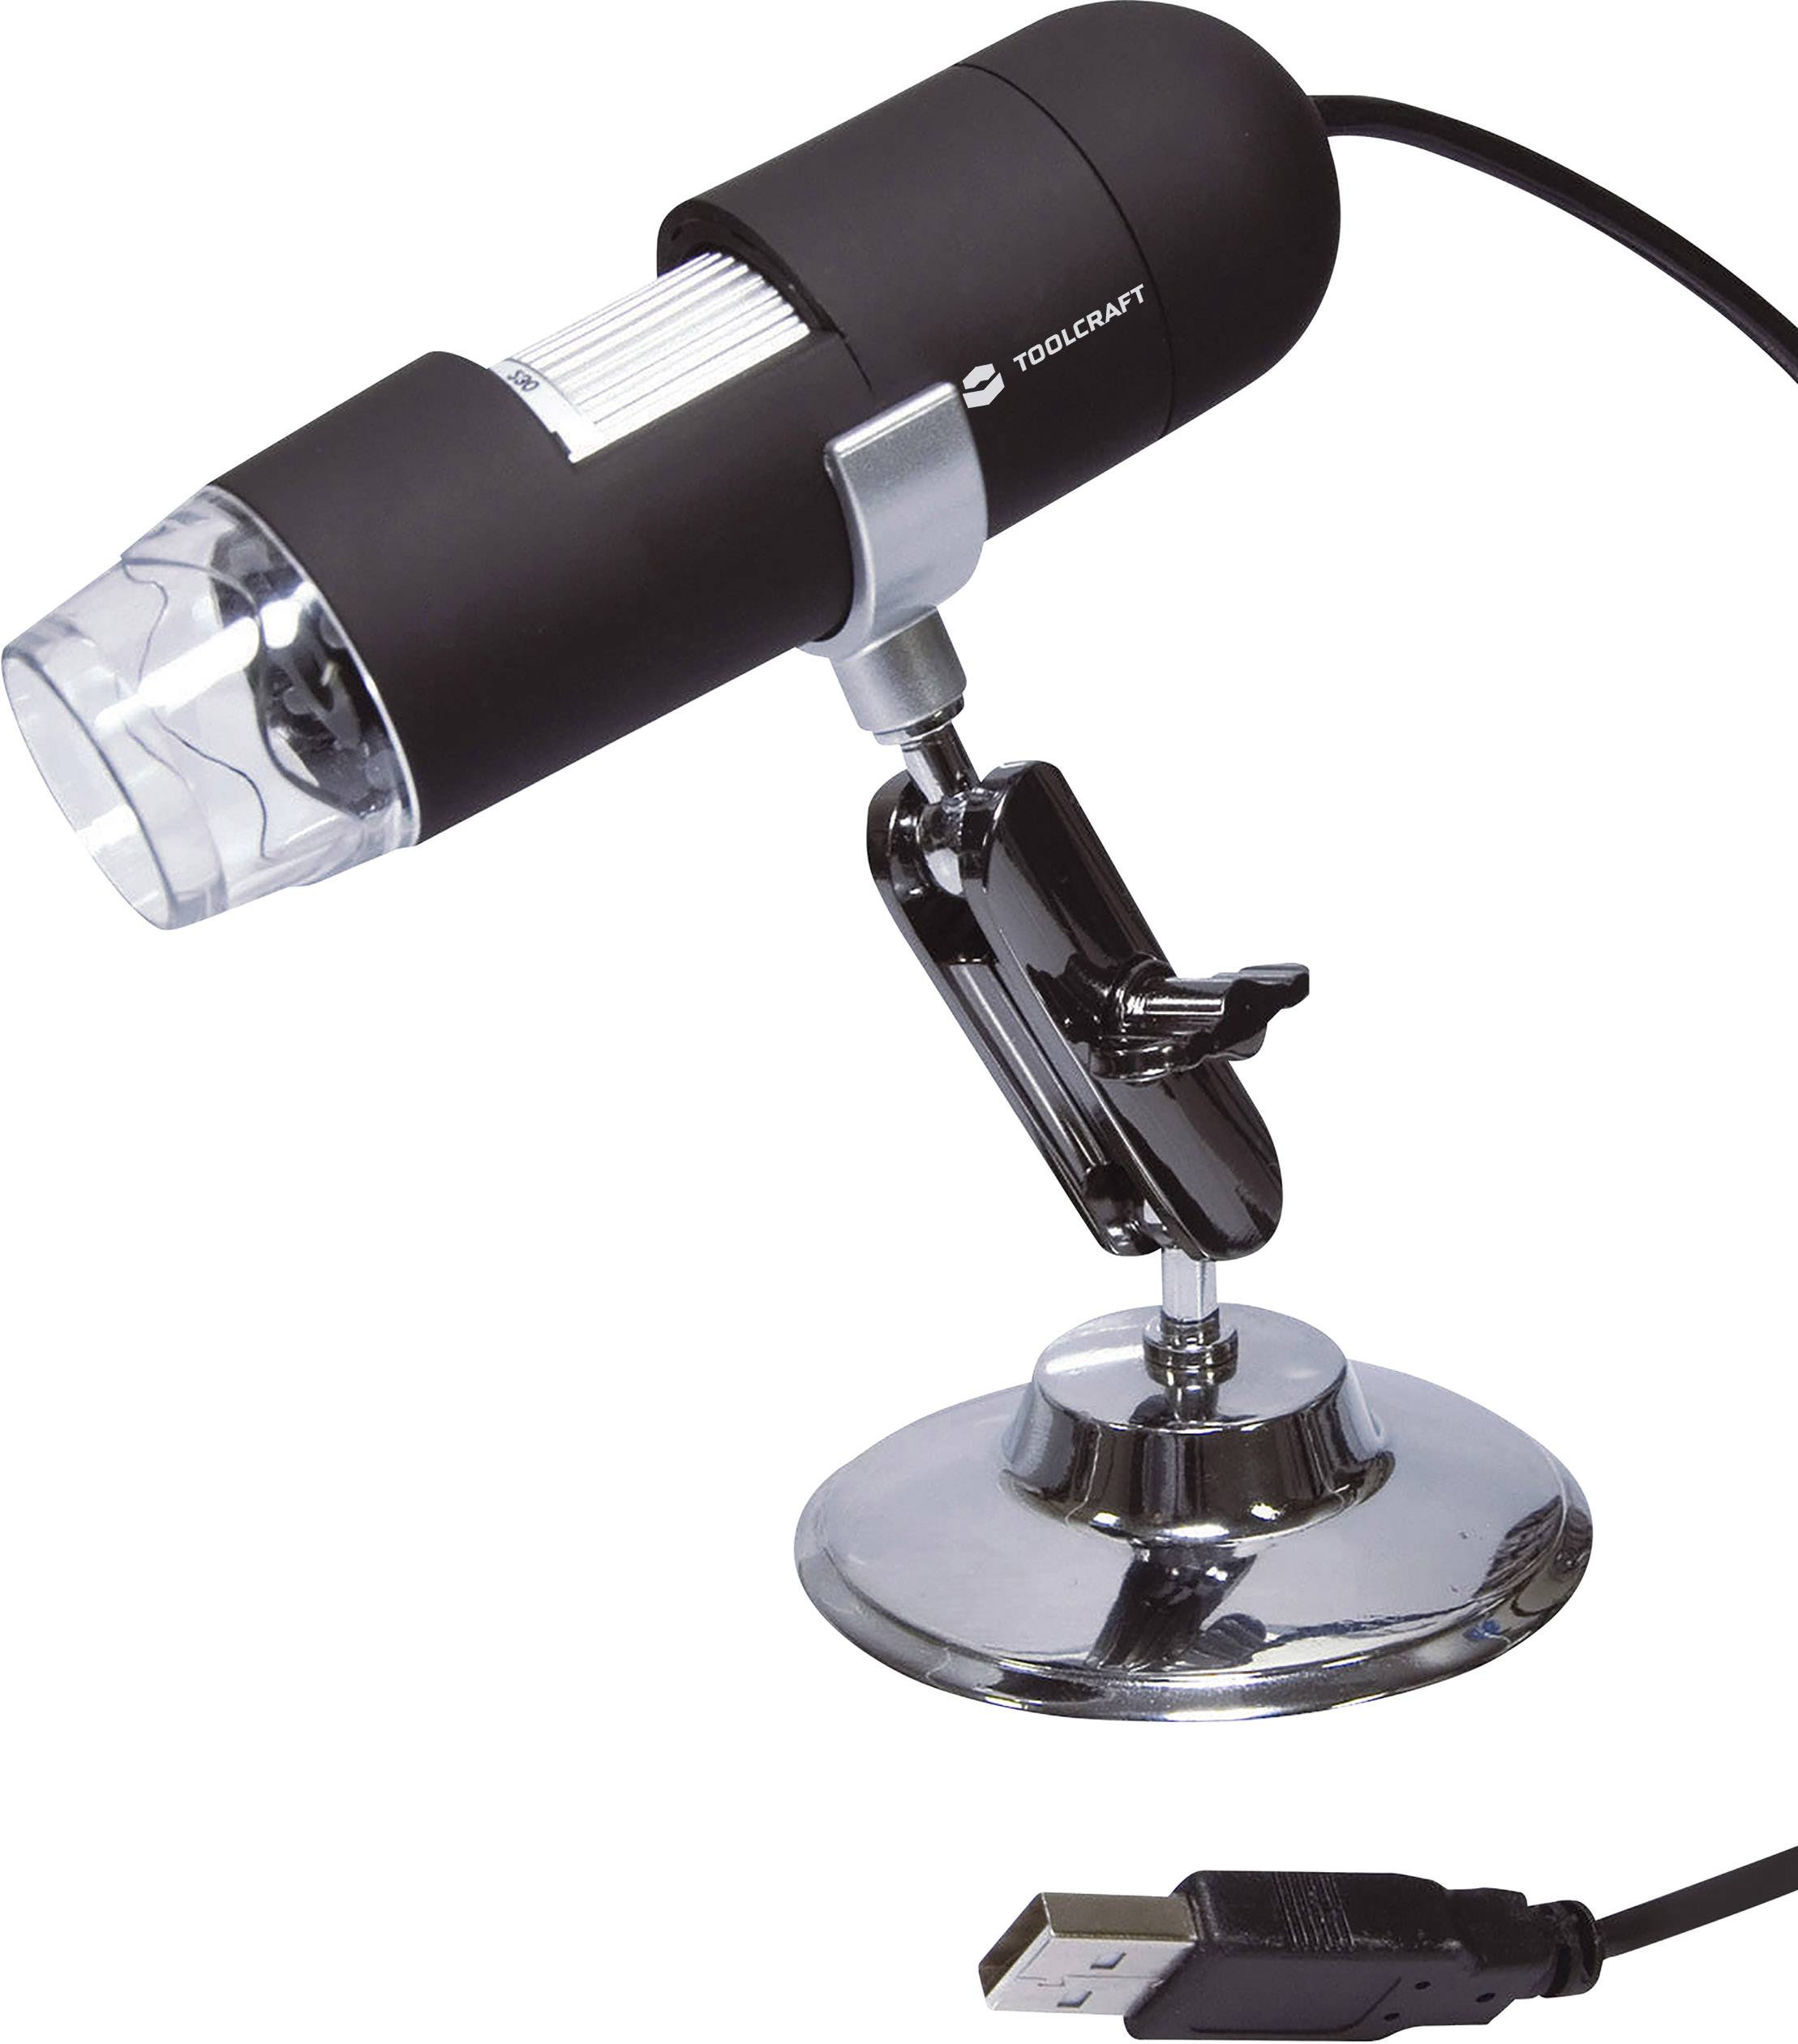 Markér personificering vi TOOLCRAFT USB microscope 2 MP Digital zoom (max.): 200 x | Conrad.com